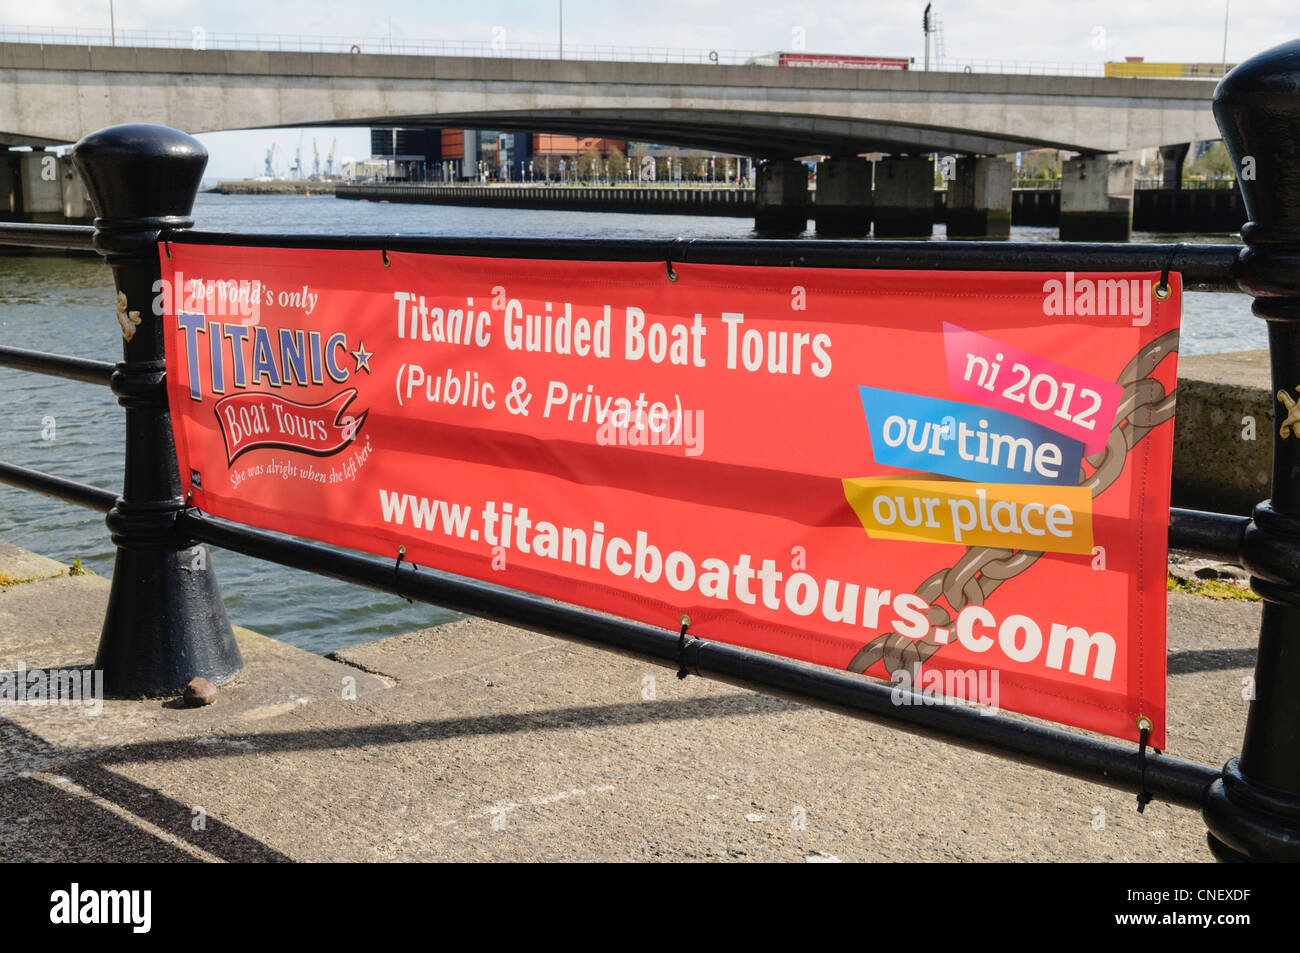 Titanic boat tours banner Stock Photo